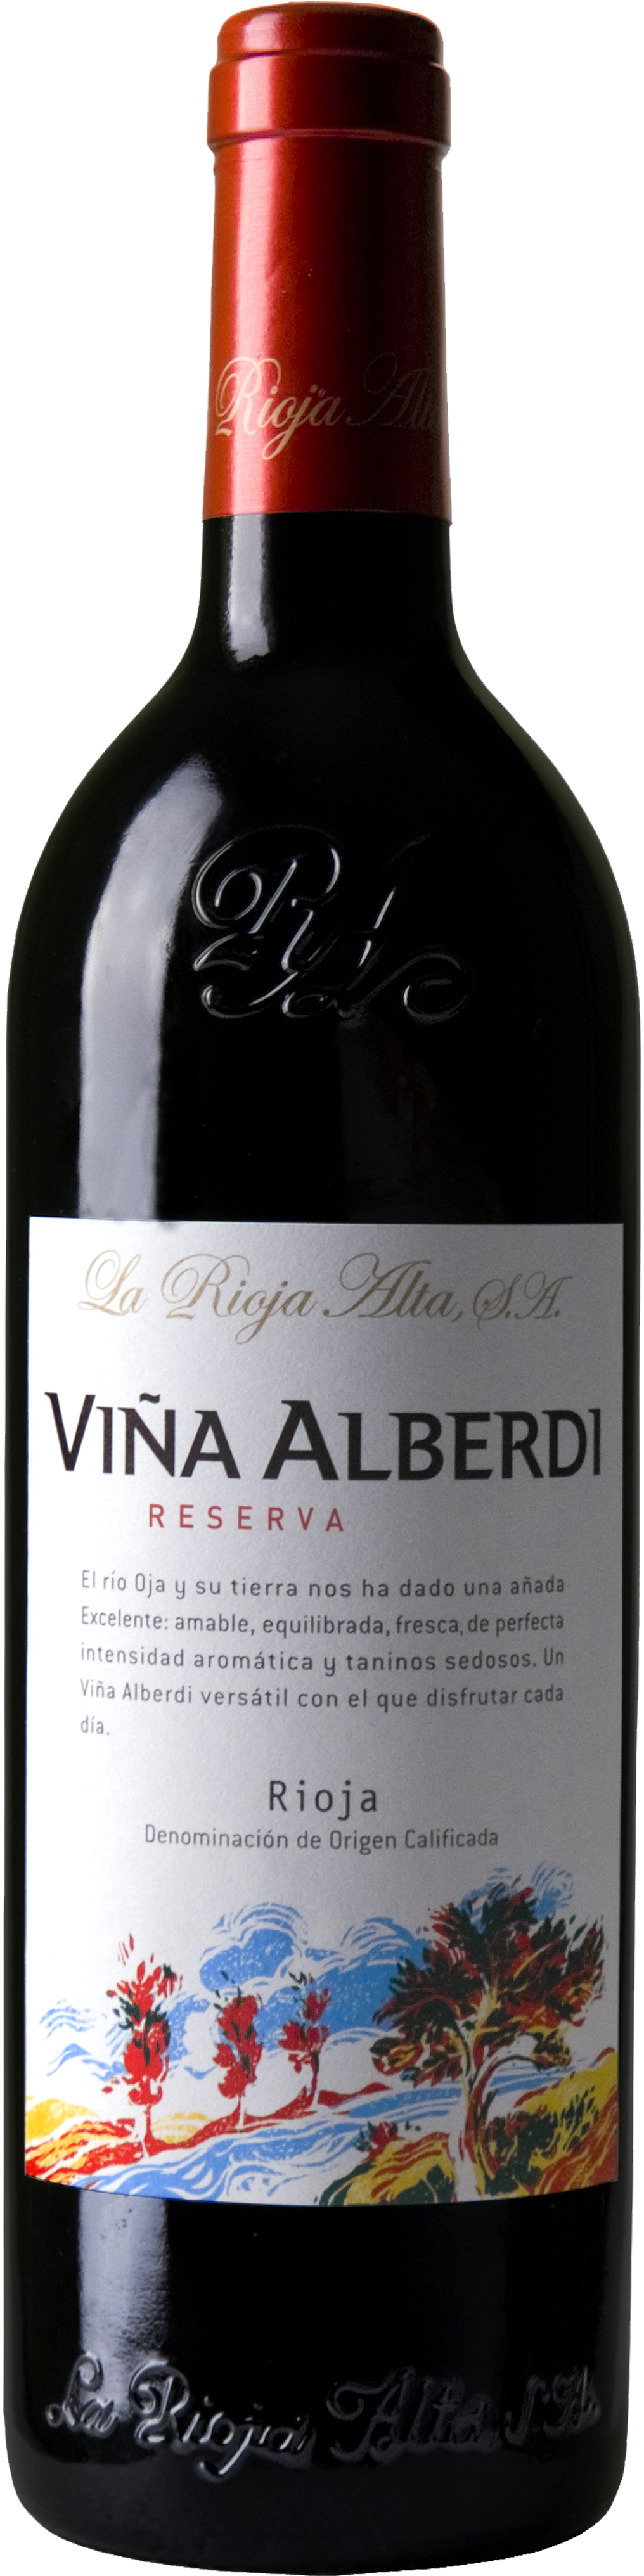 Bottle shot of 2003 Viña Alberdi Reserva